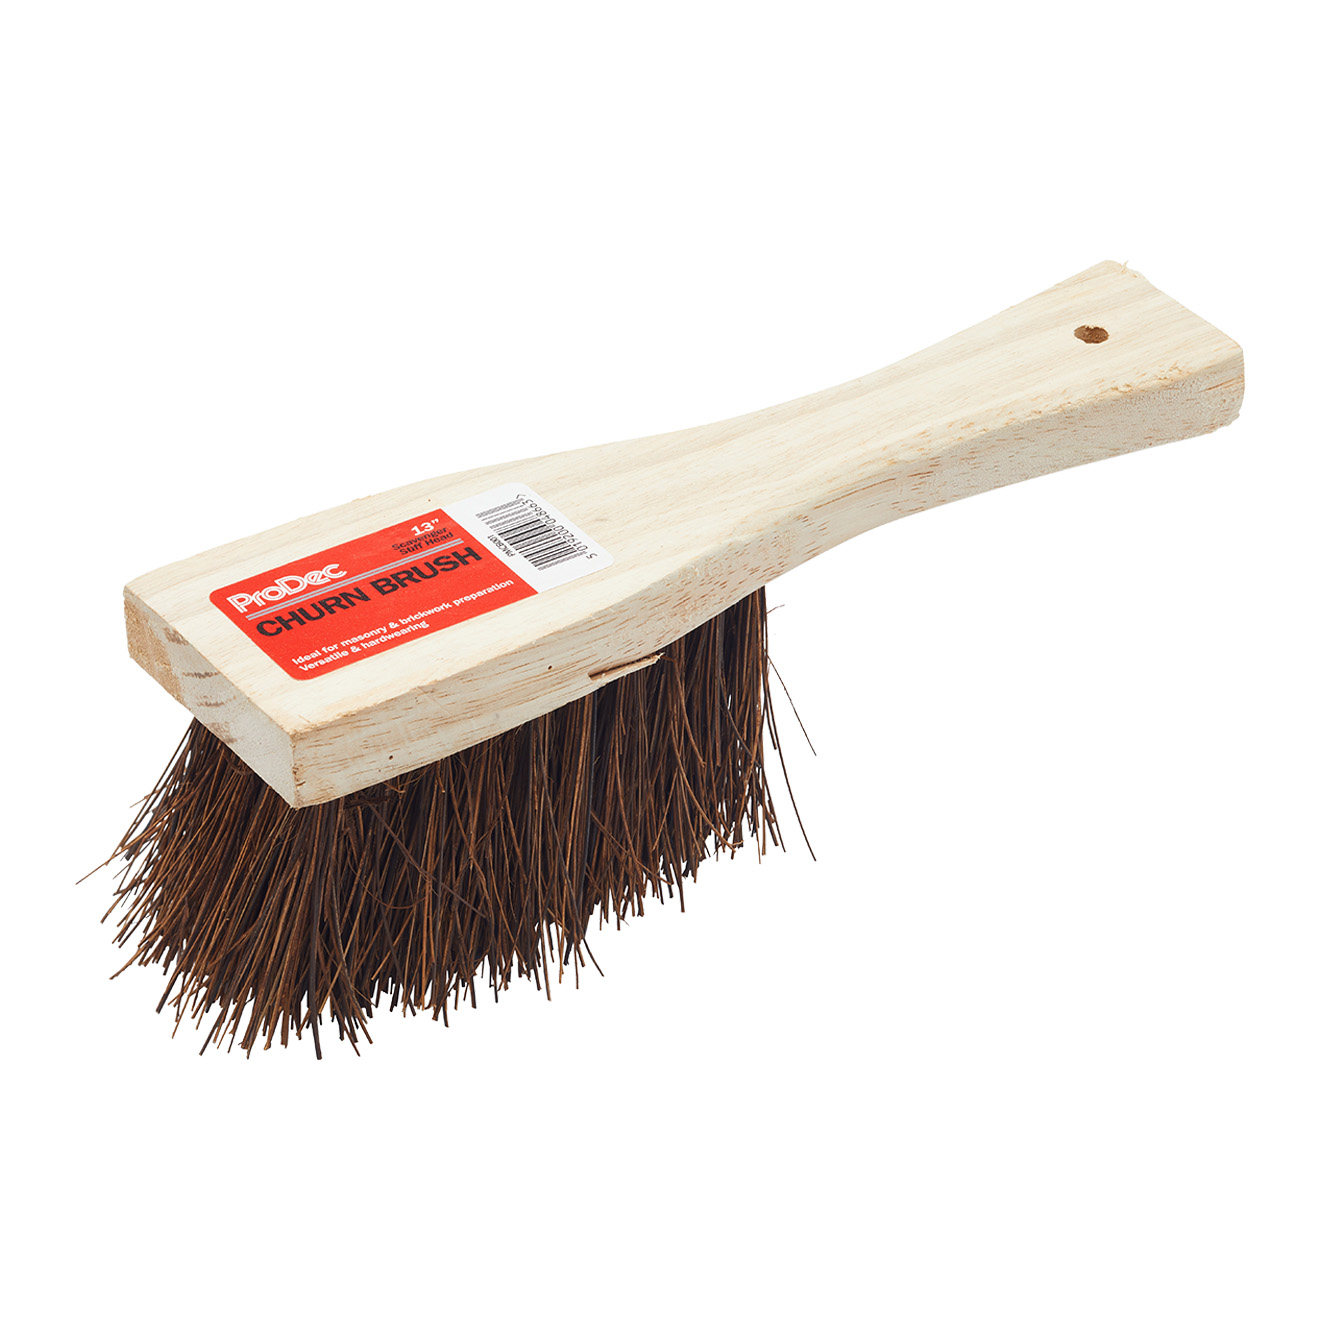 Masonry Cleaning/Churn Brush